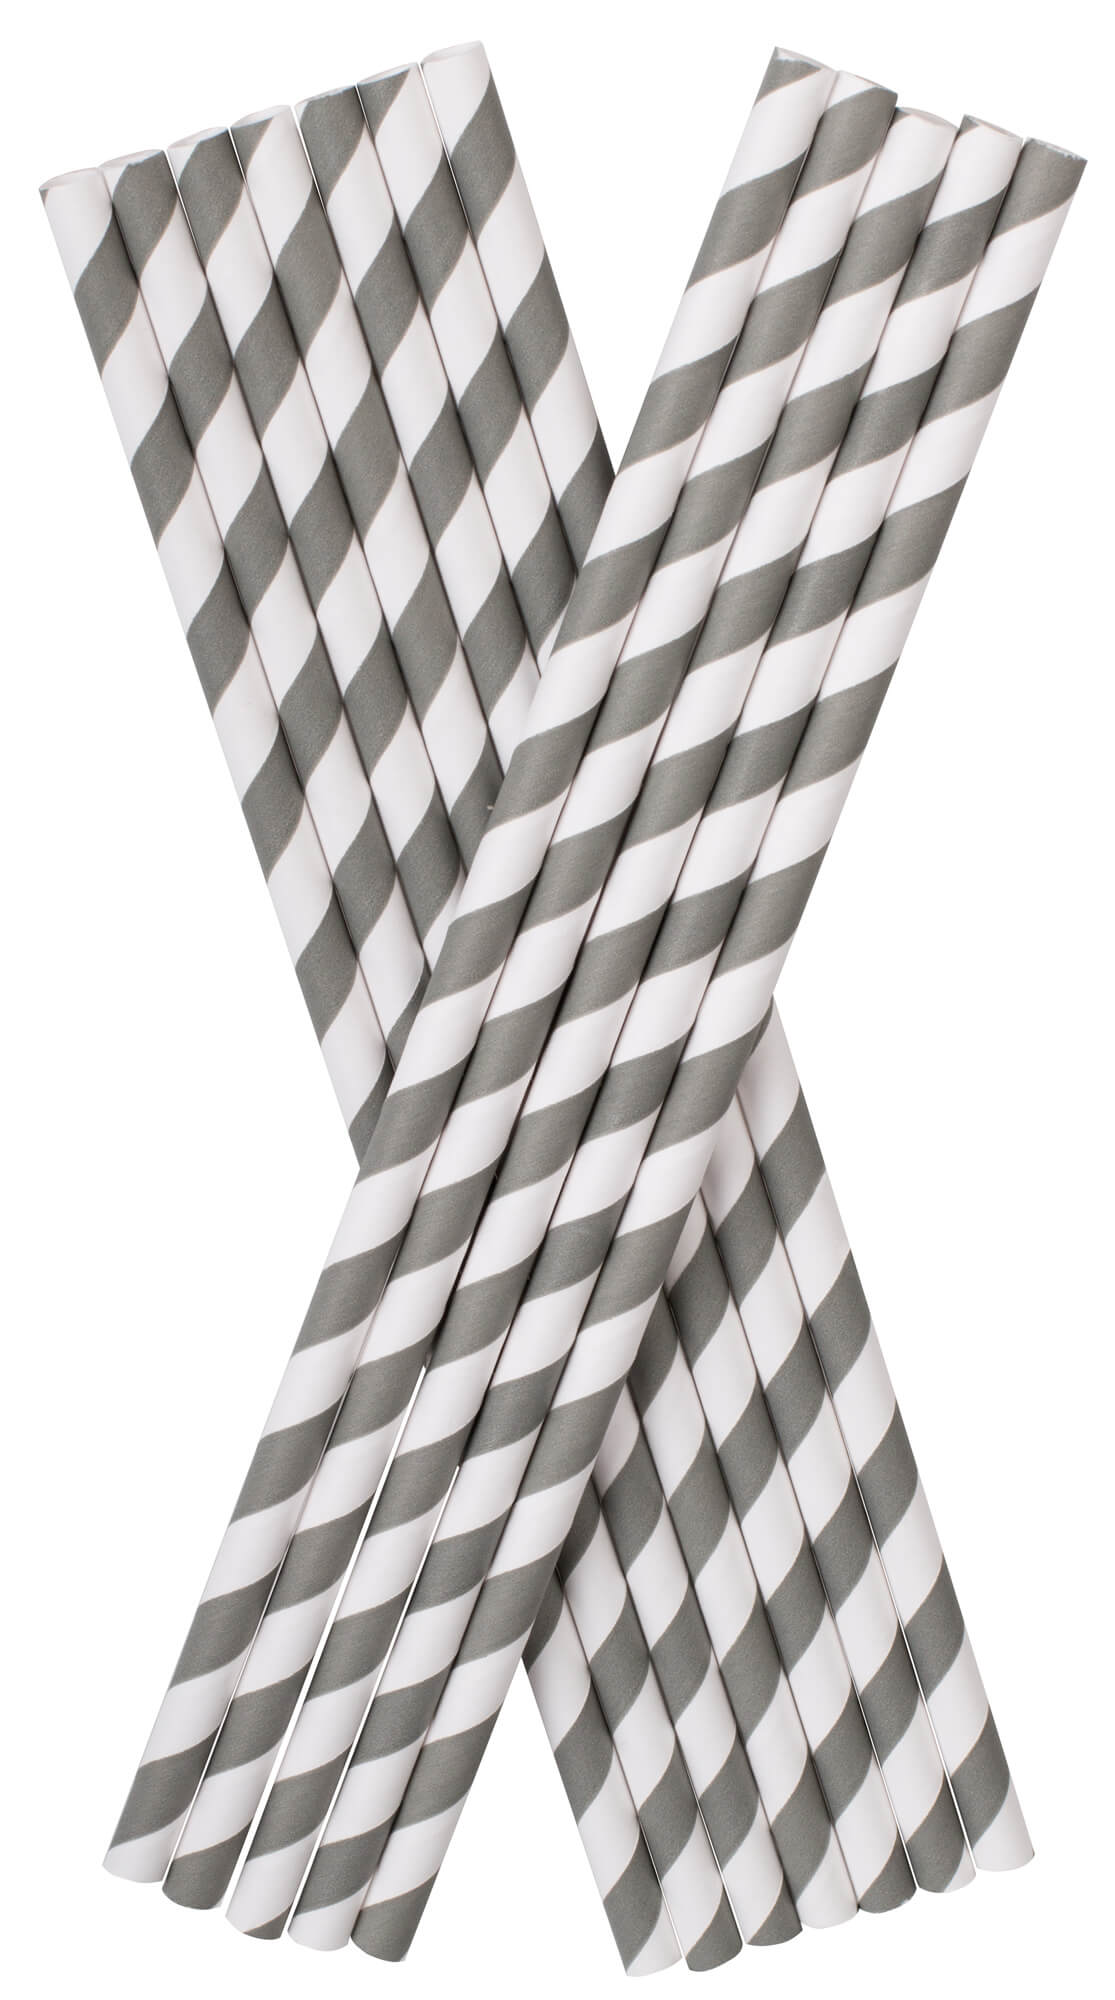 Drinking Straws, Paper (8x255mm) - grey white striped